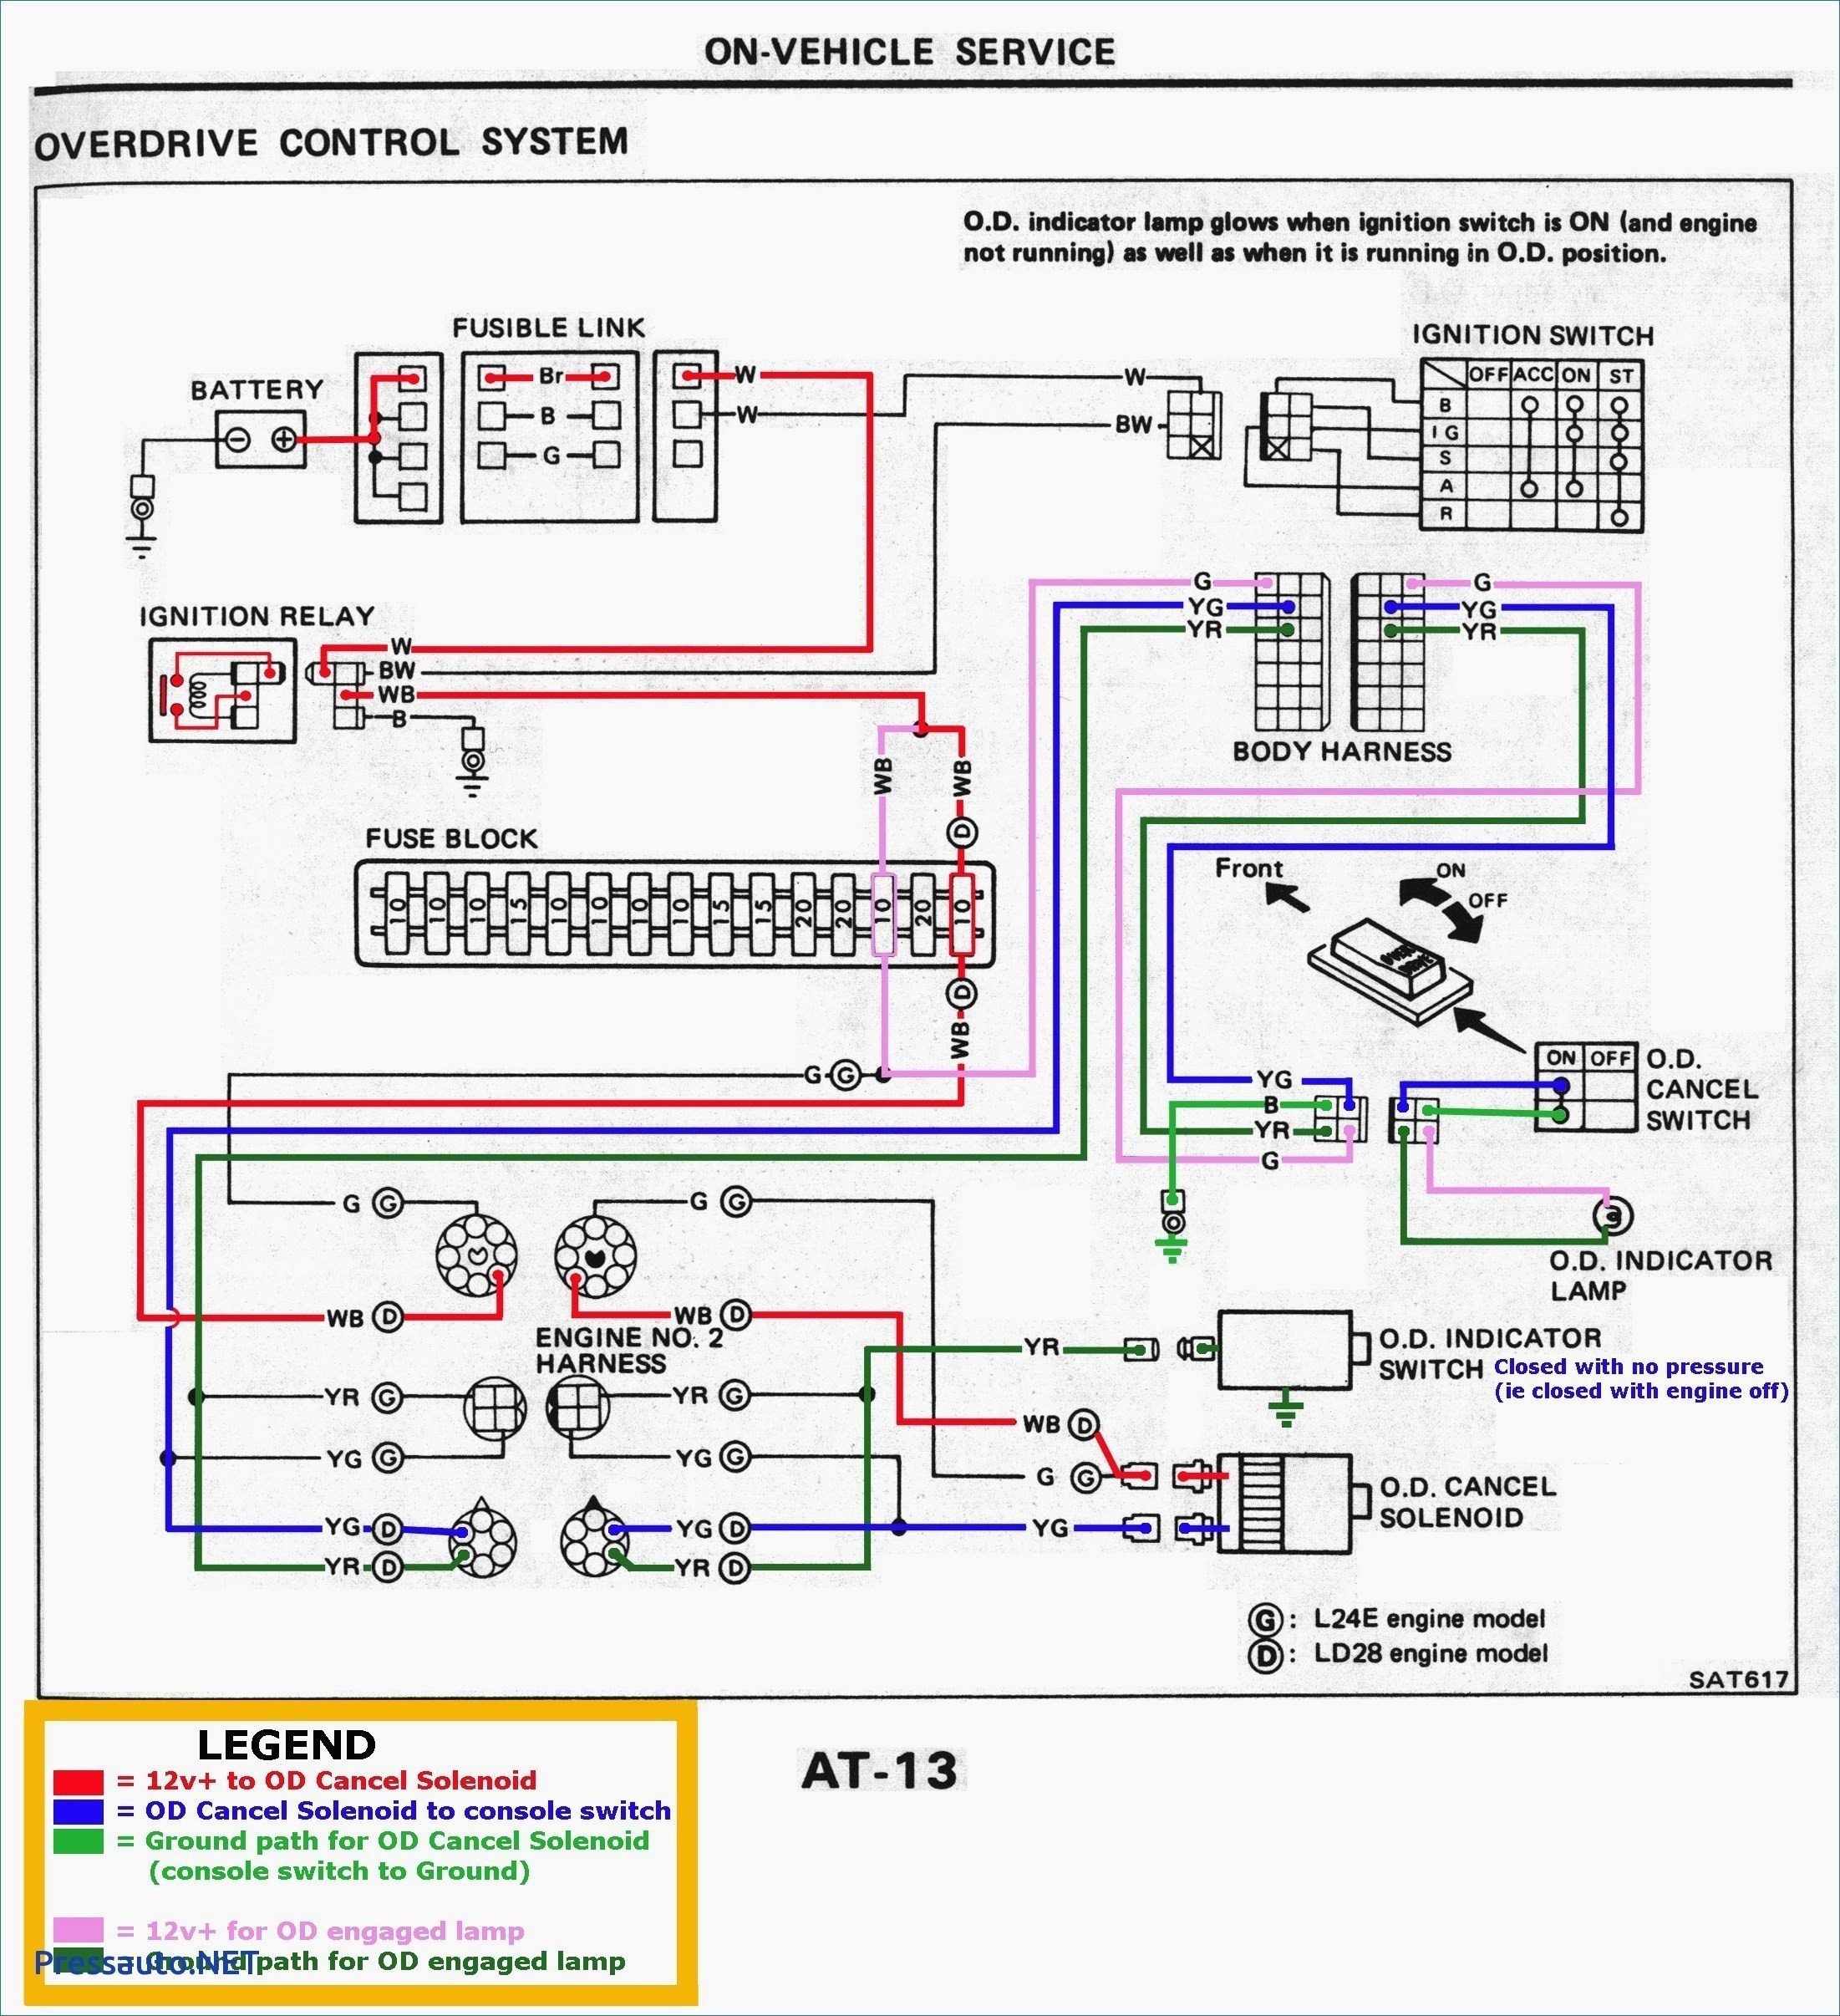 Simple Diagram Of Car Parts Automotive Electrical Wiring Diagrams Electrical Circuit 2018 Wiring